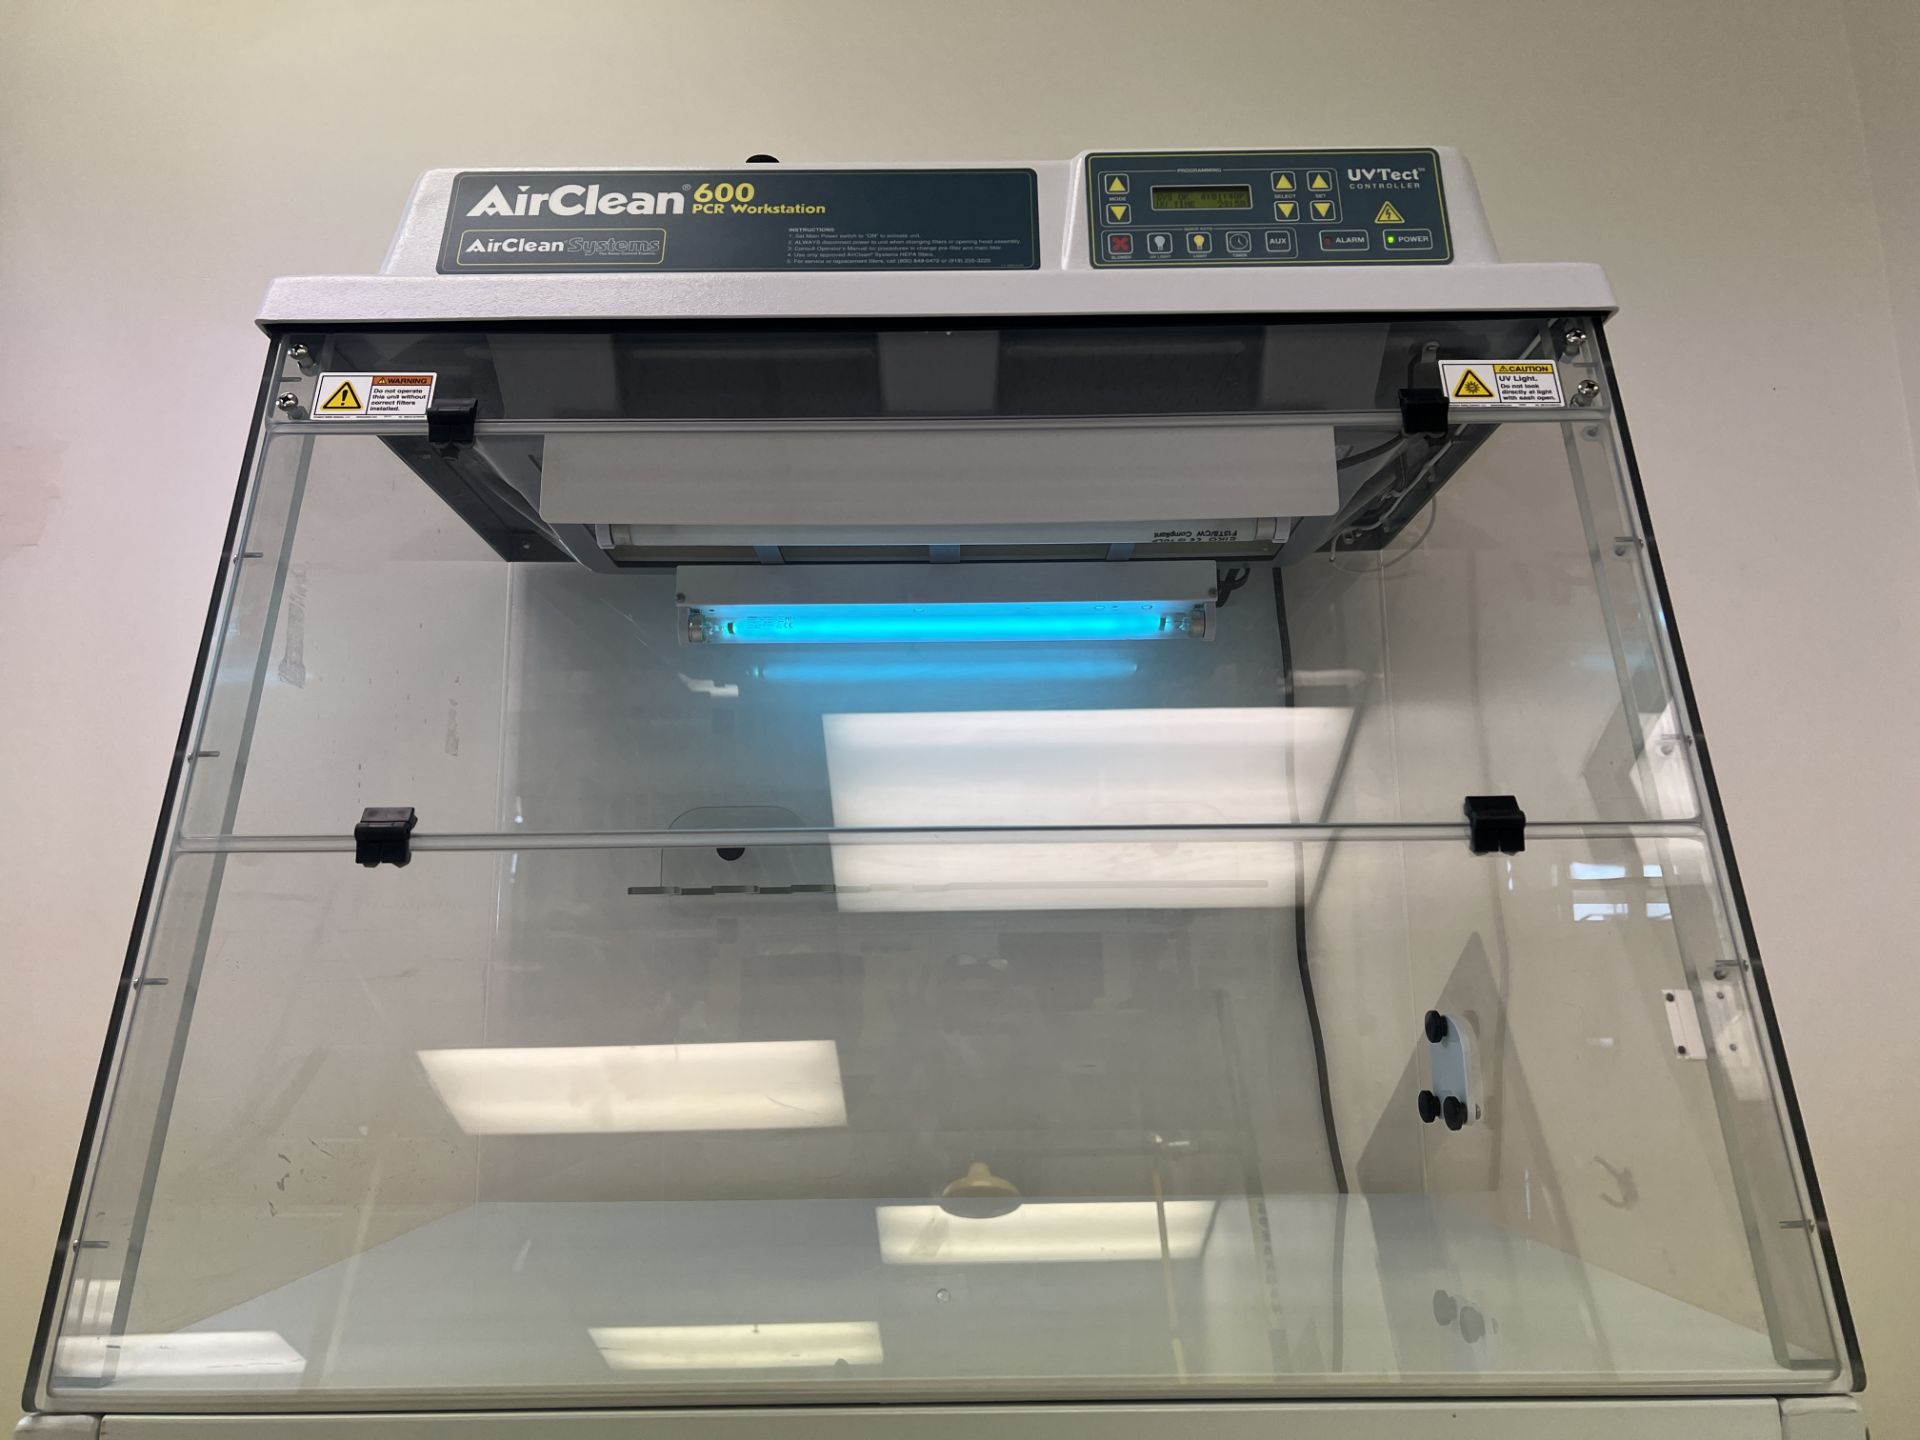 PCR Workstation, Salinas, CA - Image 2 of 5